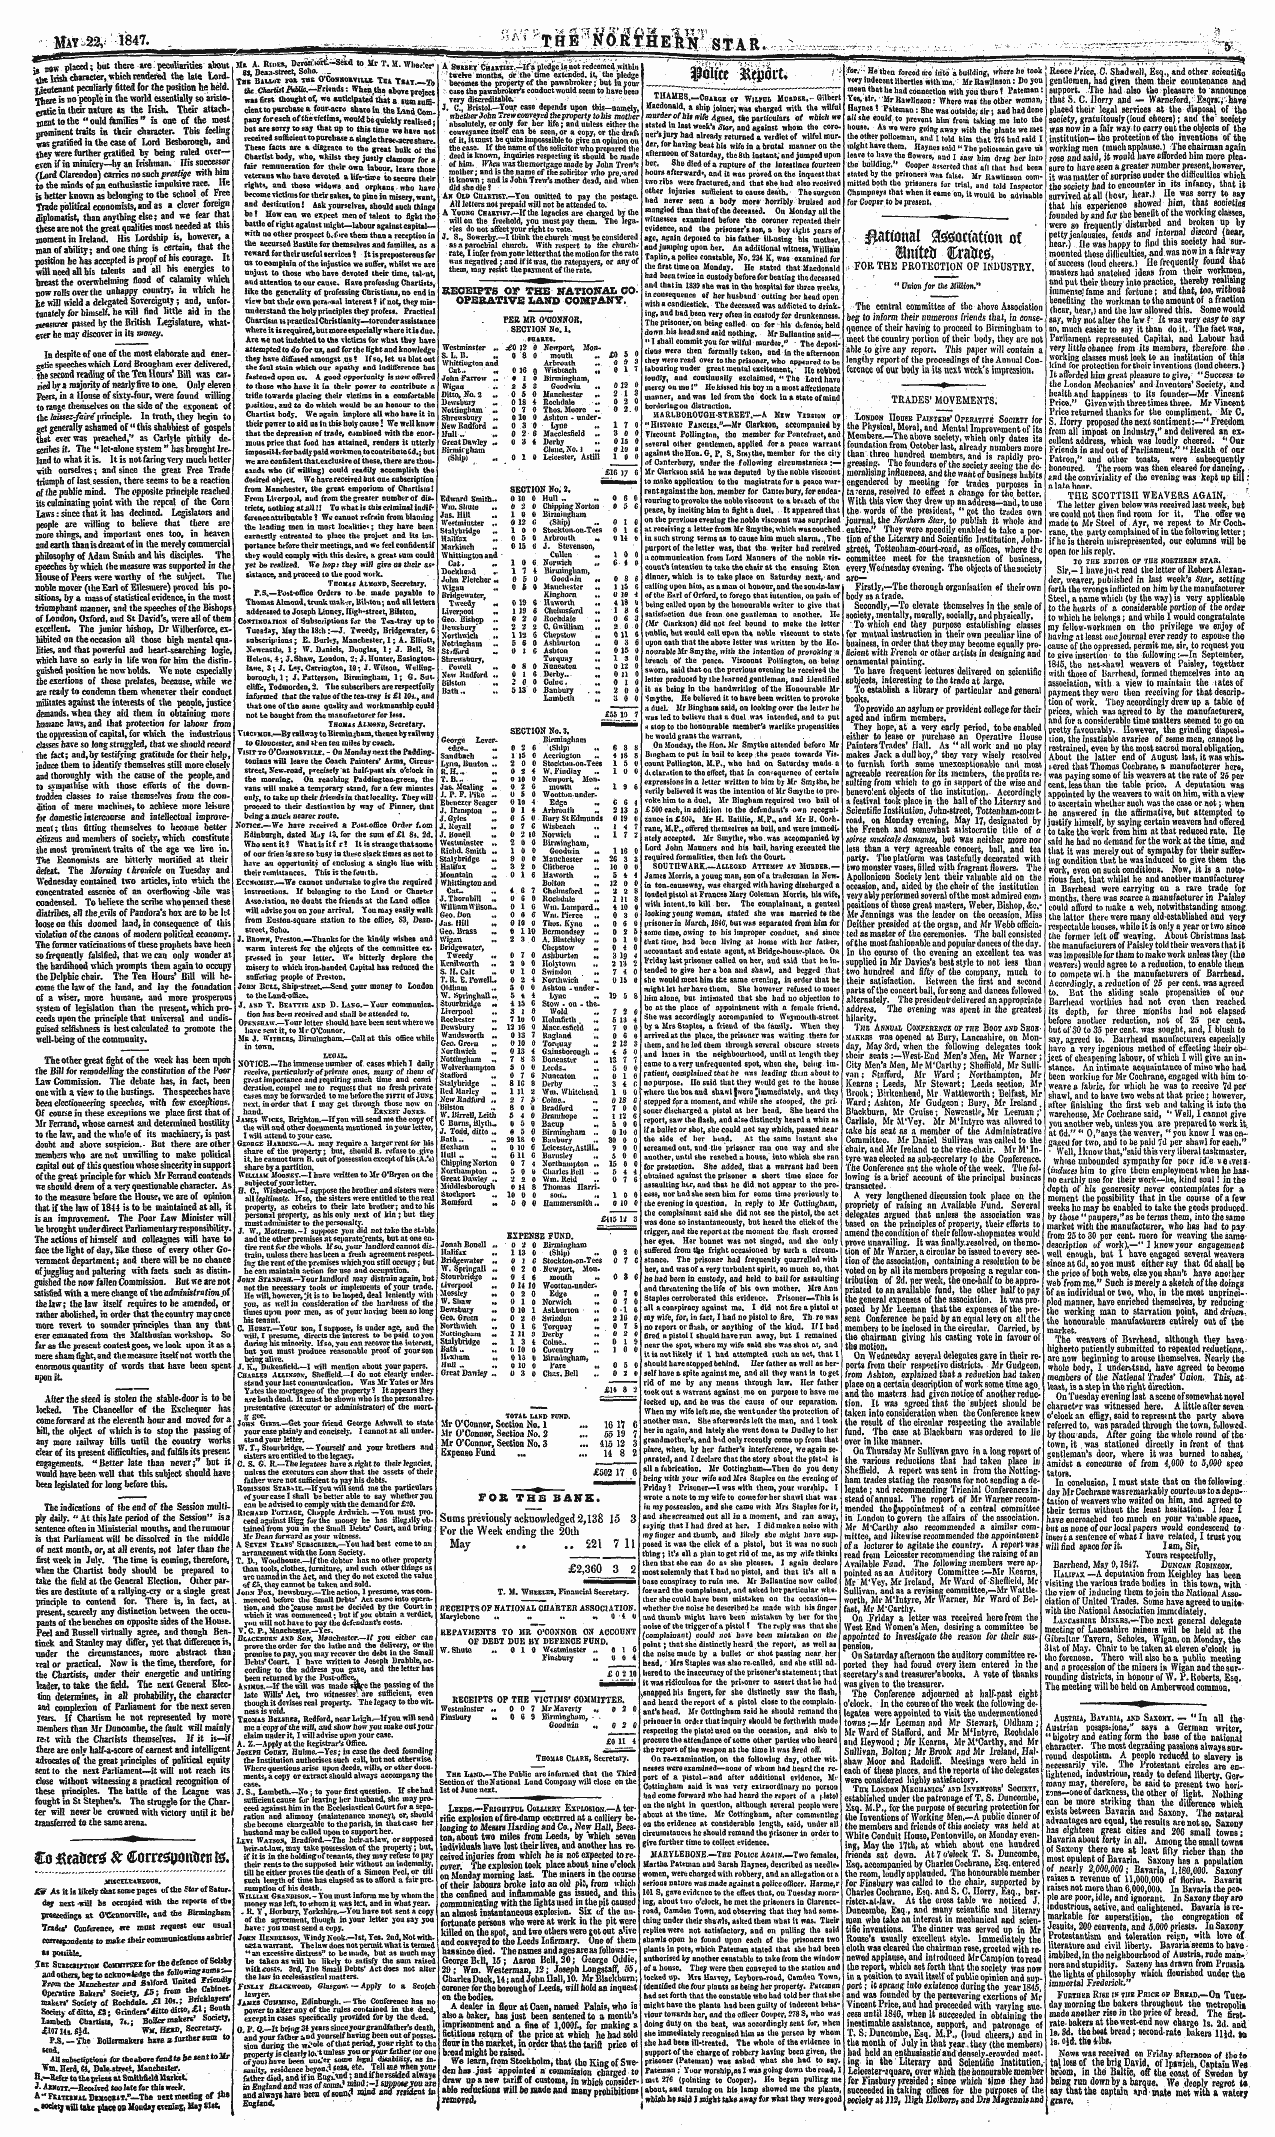 Northern Star (1837-1852): jS F Y, 3rd edition - Police L&Fot